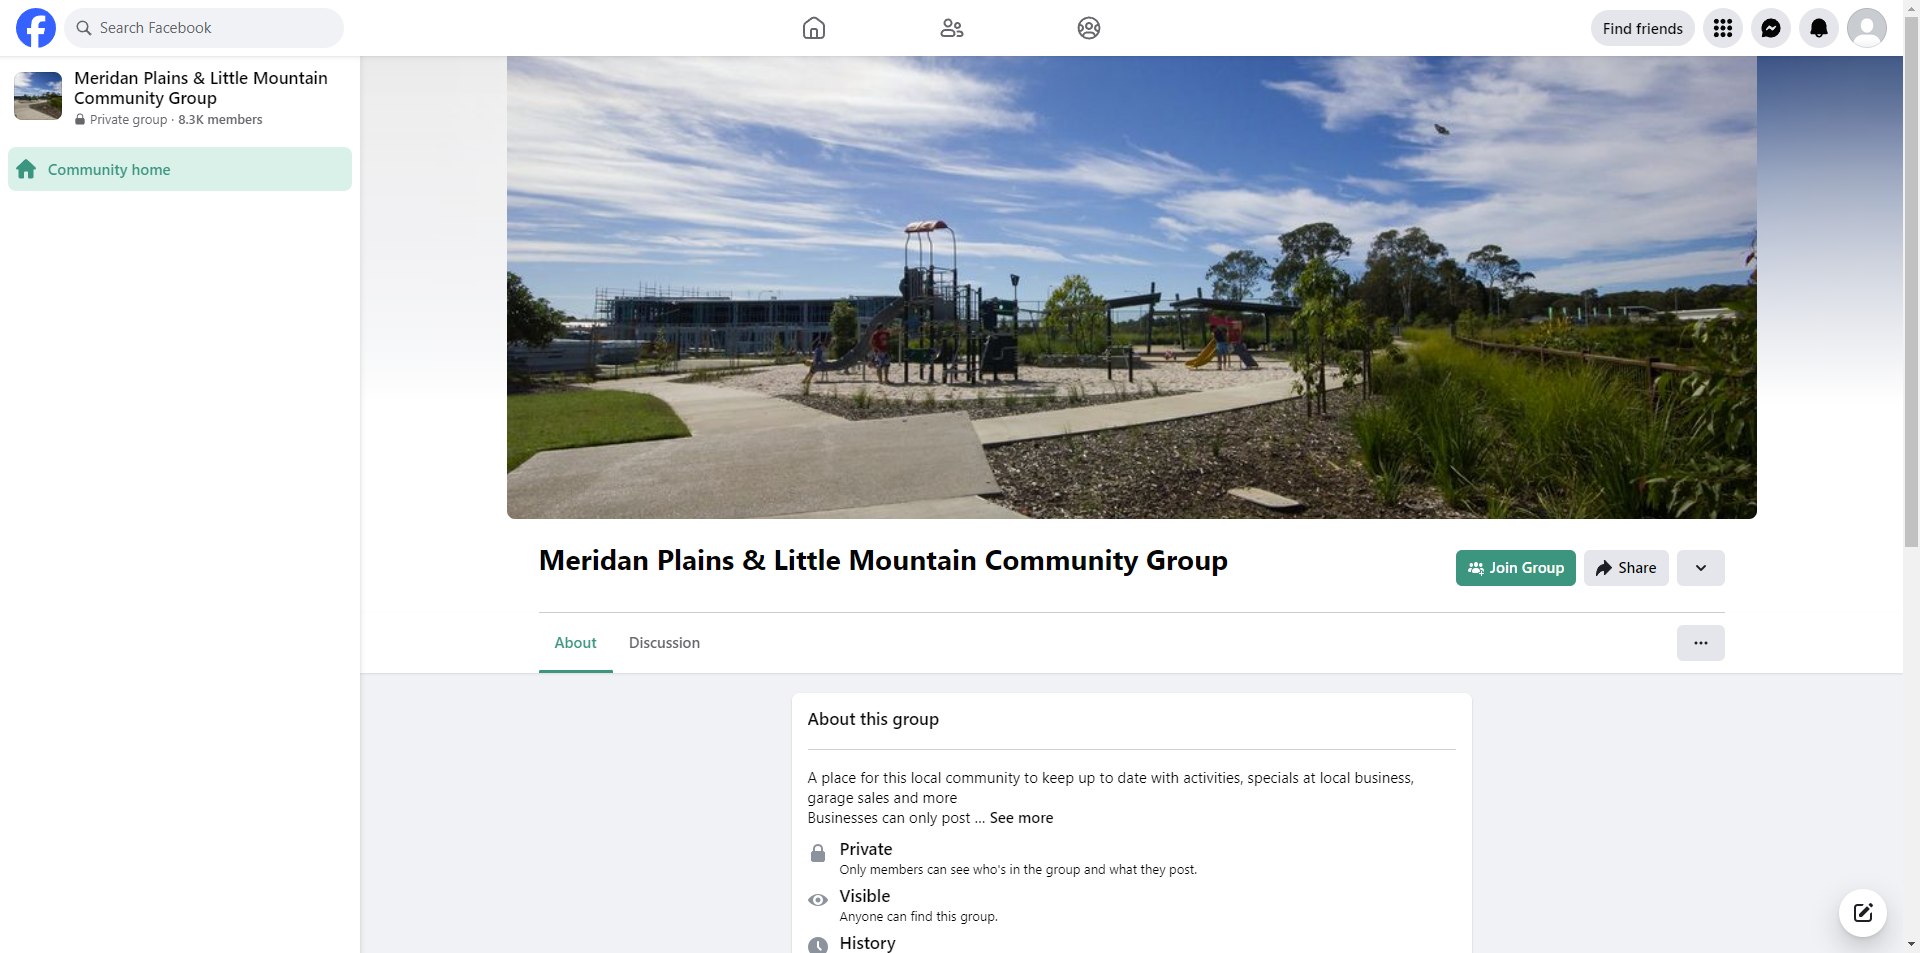 Meridan Plains & Little Mountain Community Group